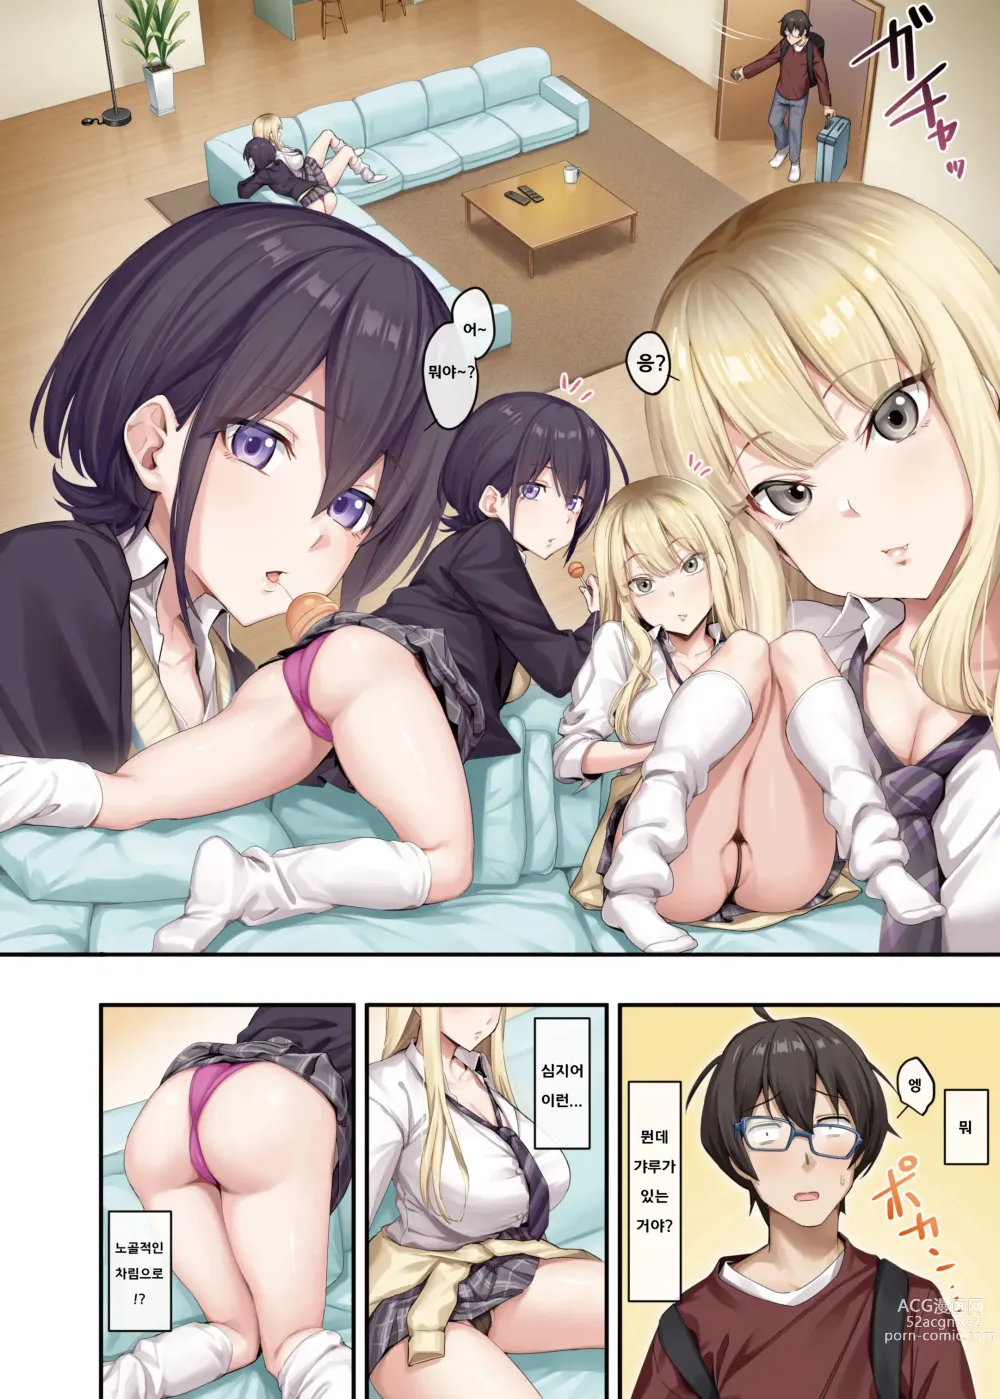 Page 3 of doujinshi 가정교사로써 더부살이할랬더니, 음란한 갸루들과 섹스만 계속 하고 있습니다.